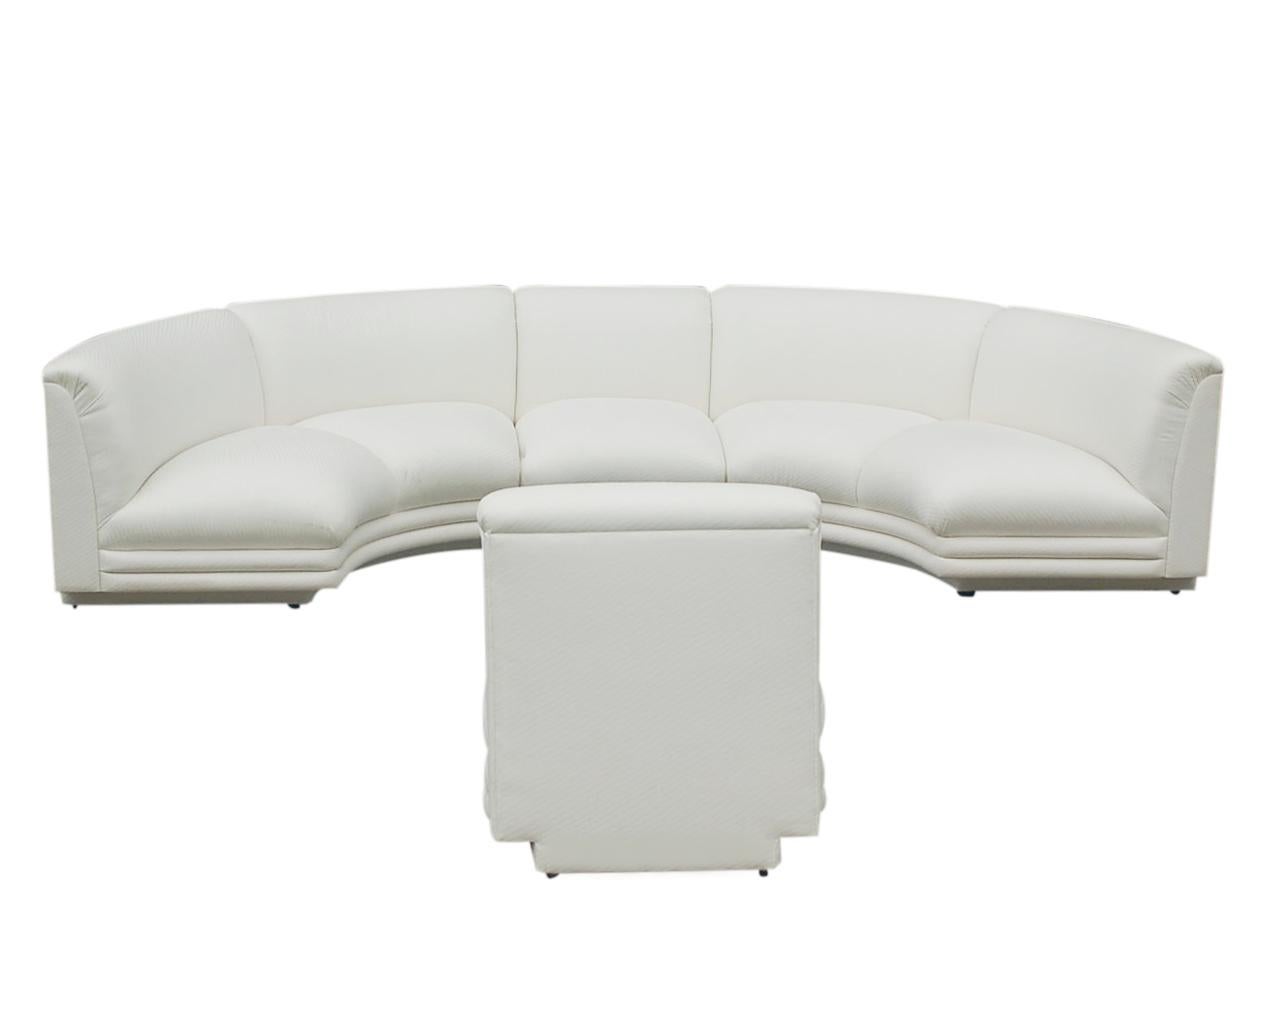 Late 20th Century Mid-Century Modern Italian Curved Semi Circular Sectional Sofa in White Fabric